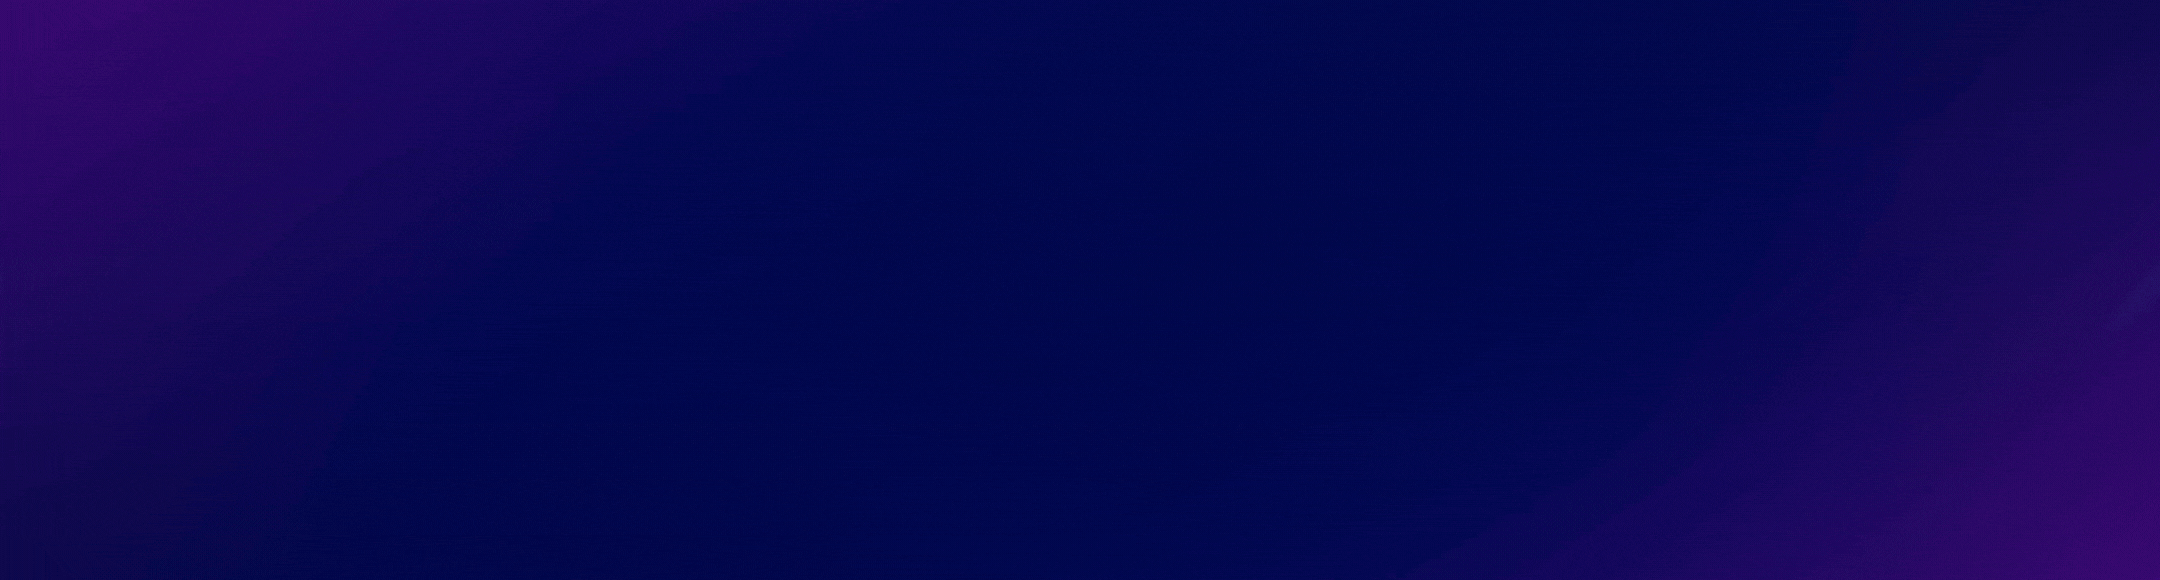 Dark Blue Neon Company Anniversary Invitation Video (2160 x 580 px) (1).gif__PID:131fe415-4a23-462d-95b9-27bdc5ffd616